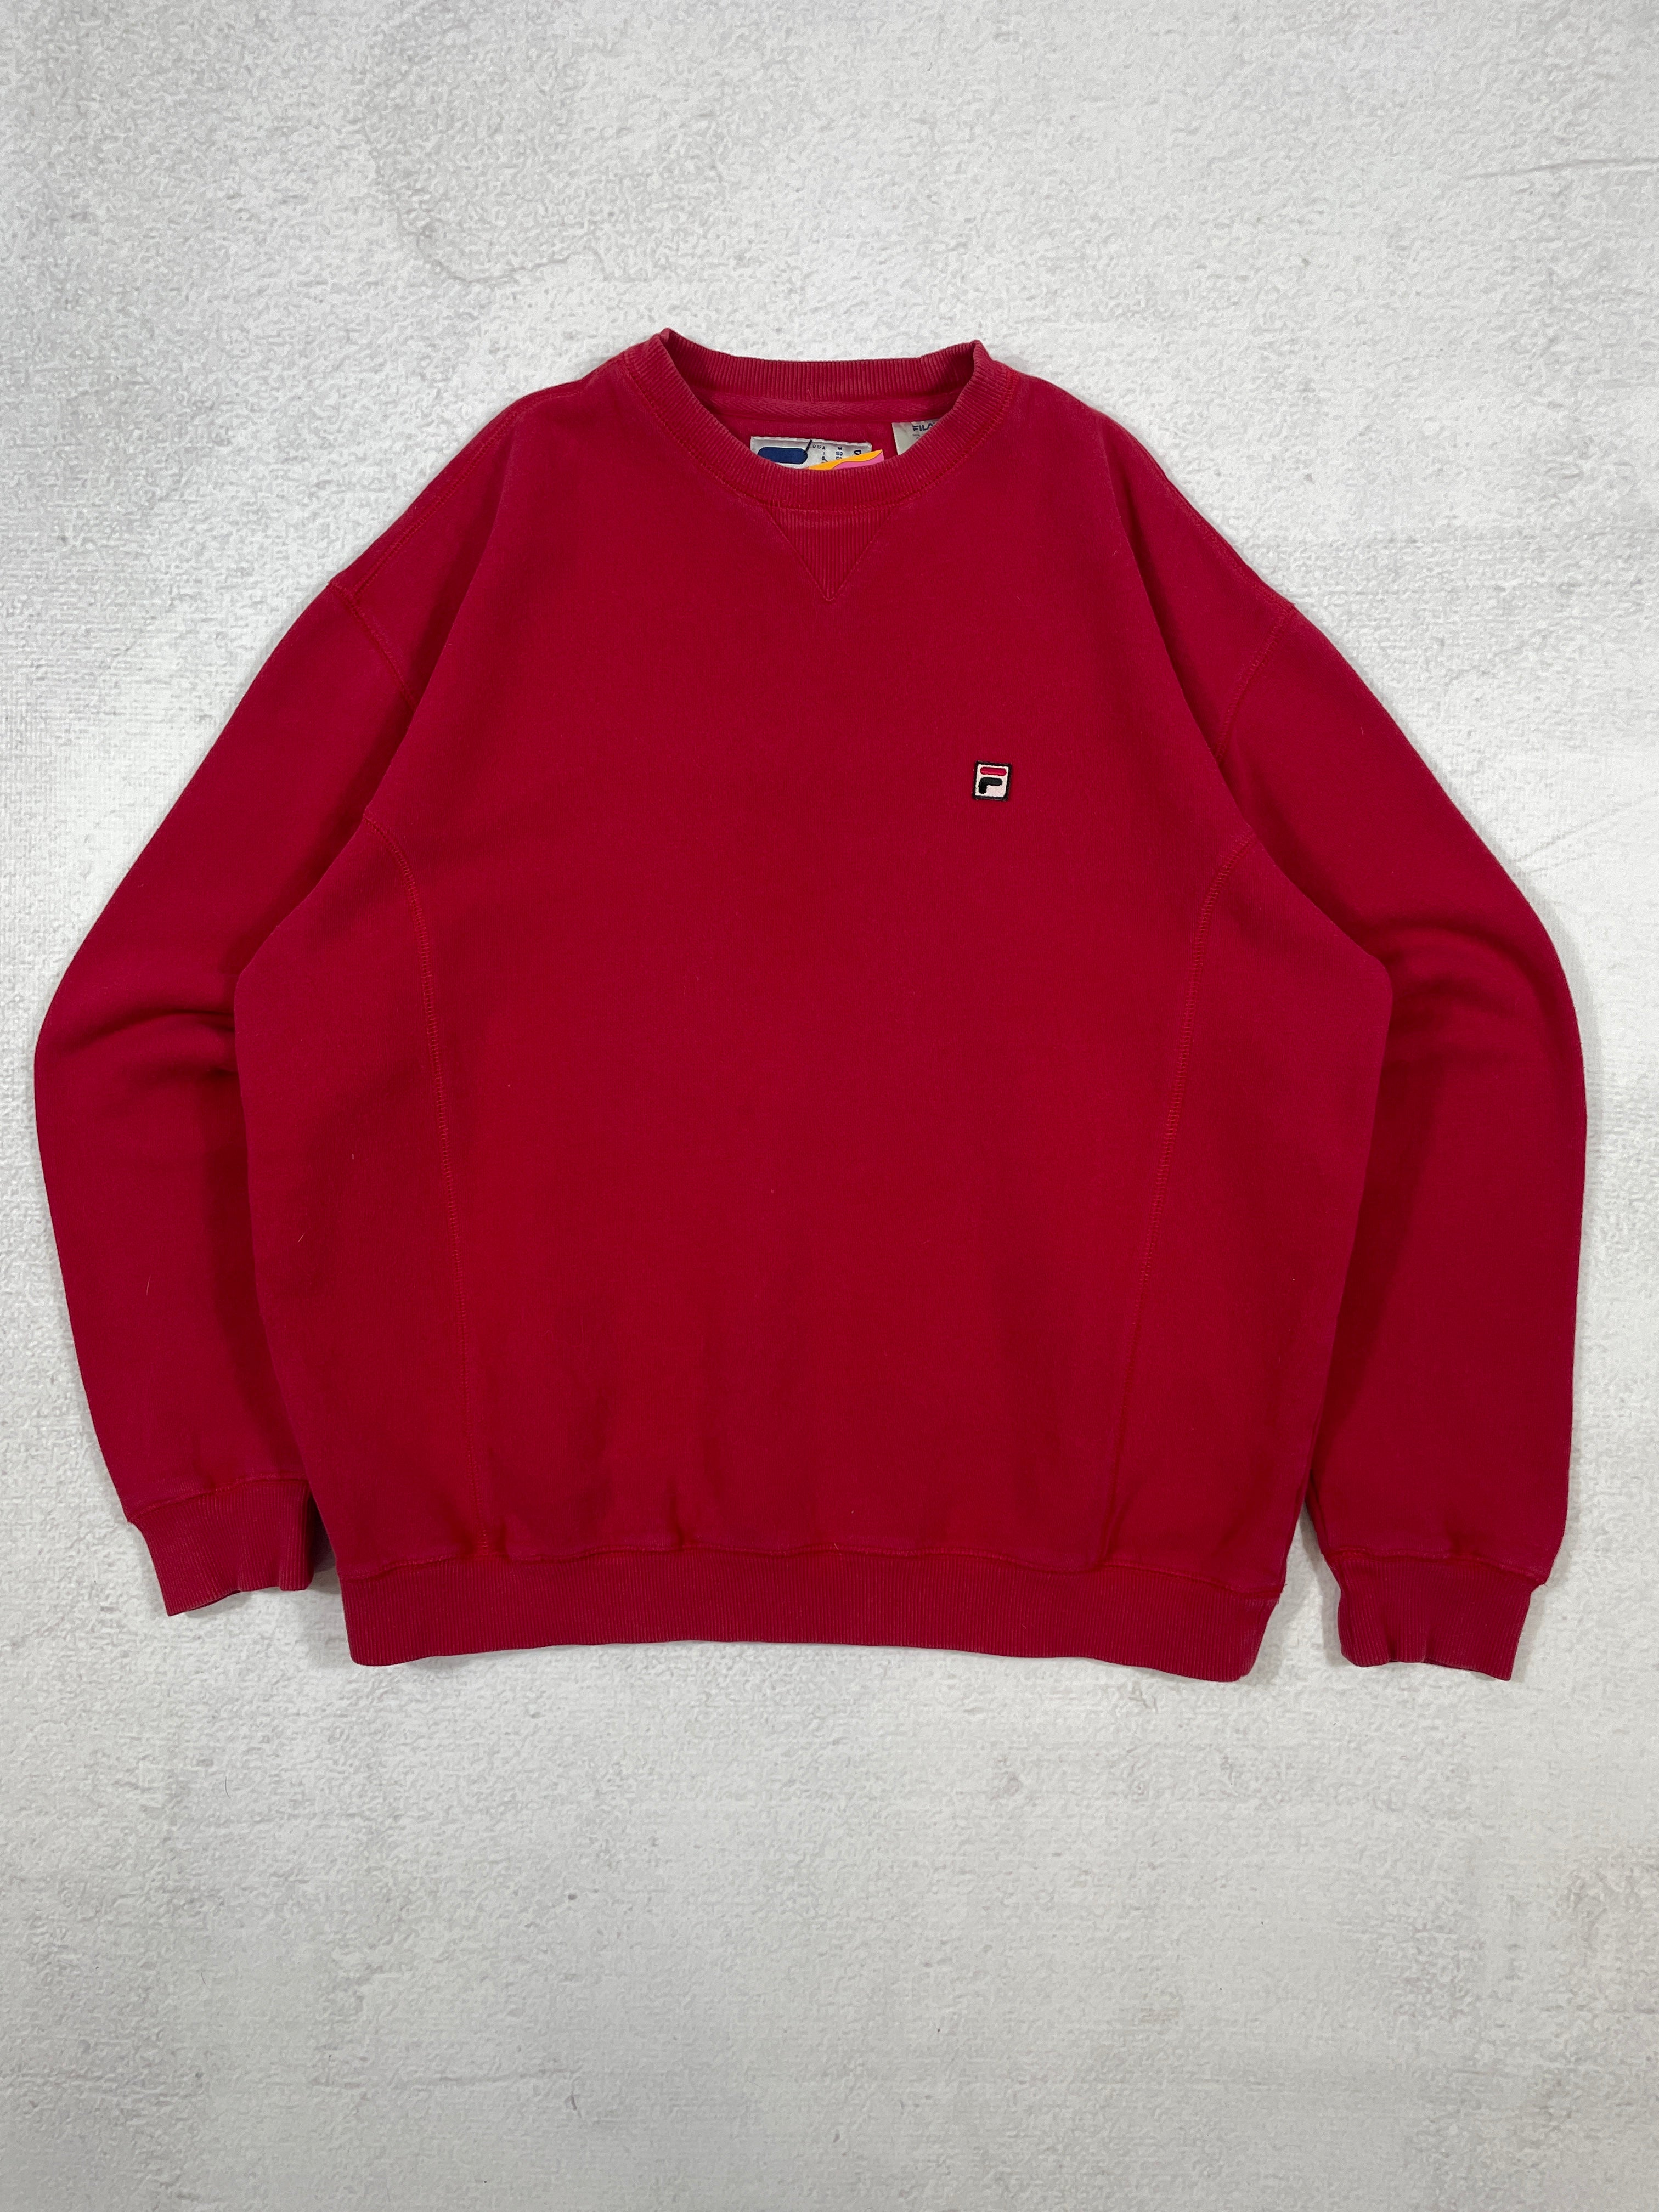 Vintage Fila Crewneck Sweatshirt - Men's Medium